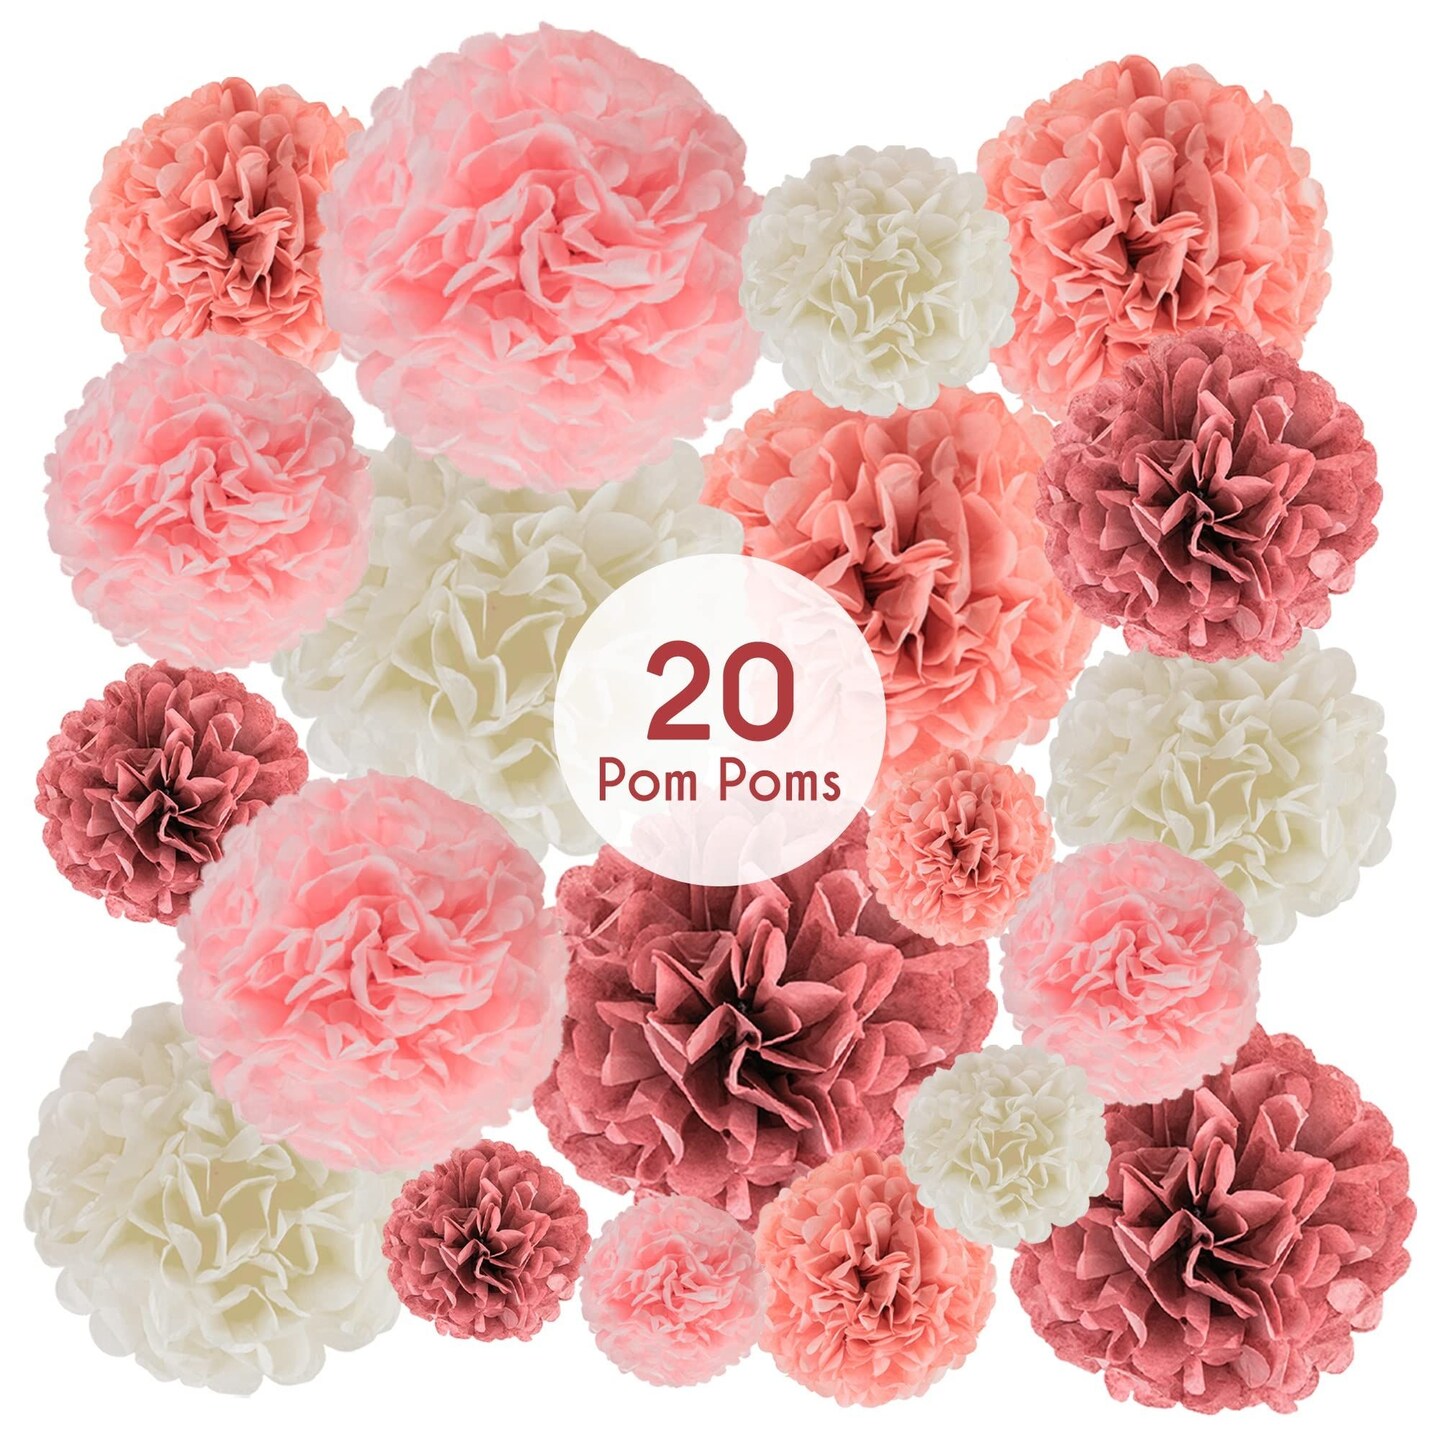 EpiqueOne 20 Piece Tissue Paper Pom Poms | Blush Pink, Dusty Rose, Mauve &#x26; Cream | Colorful Paper Flower Wall Decorations for Bridal Showers, Baby Showers, Weddings, Graduations, Tea Parties &#x26; More